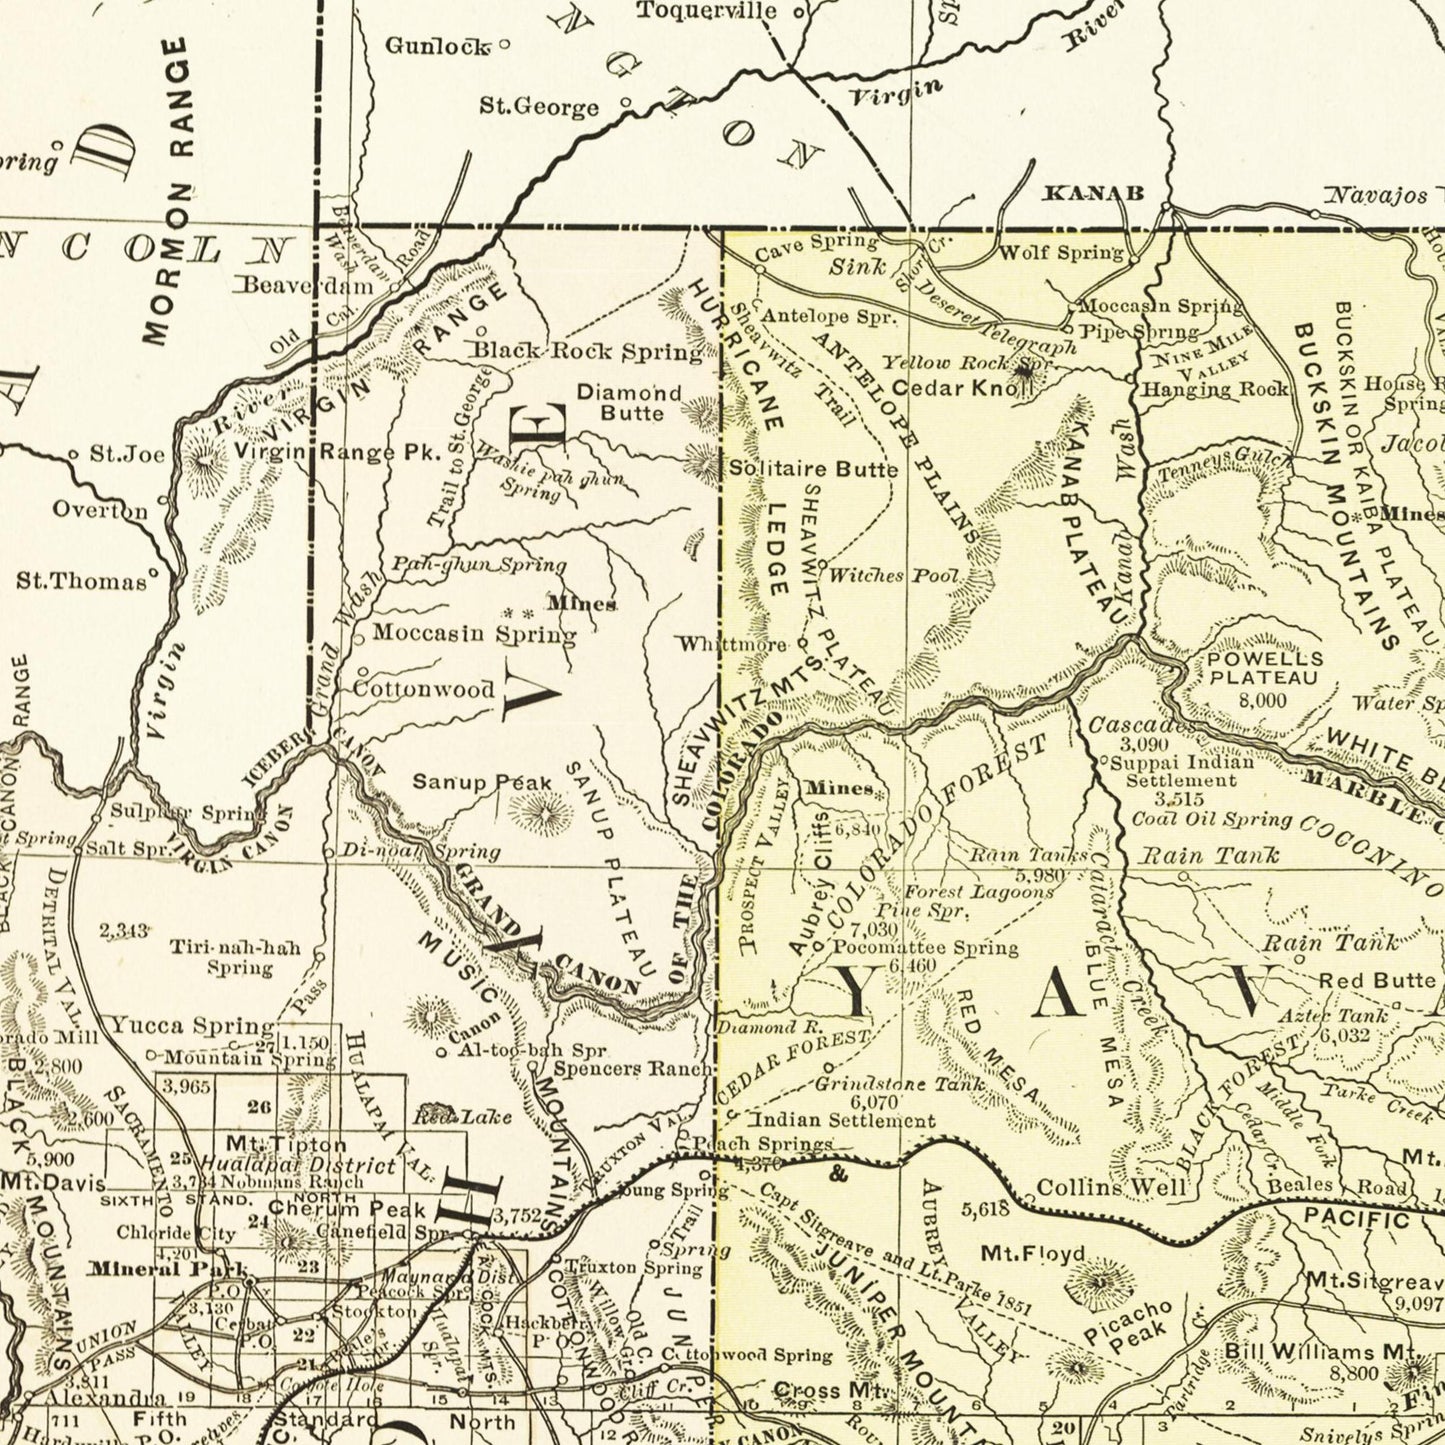 Historische Landkarte Arizona um 1882